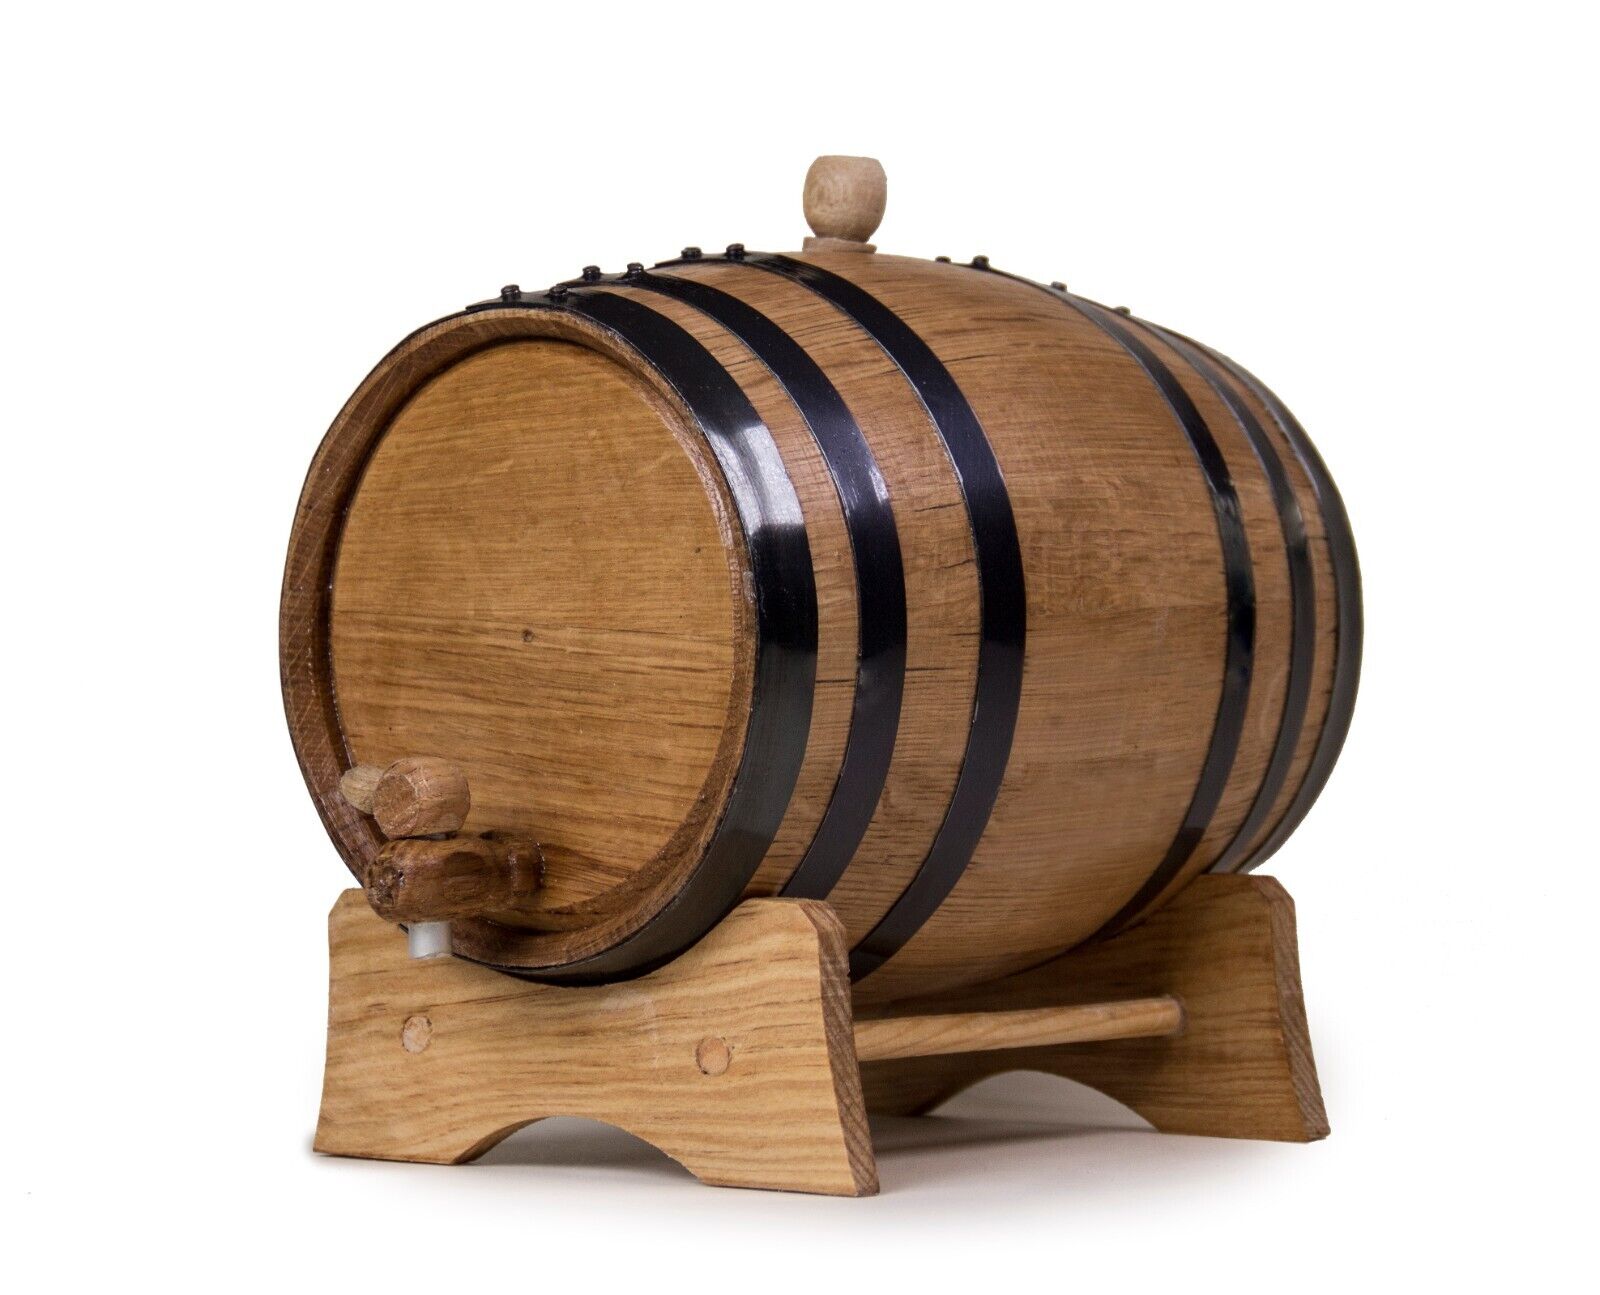 New Char Oak Aging Barrel Wooden Whiskey Barrel, Bourbon Wine Barrel Home Brewer